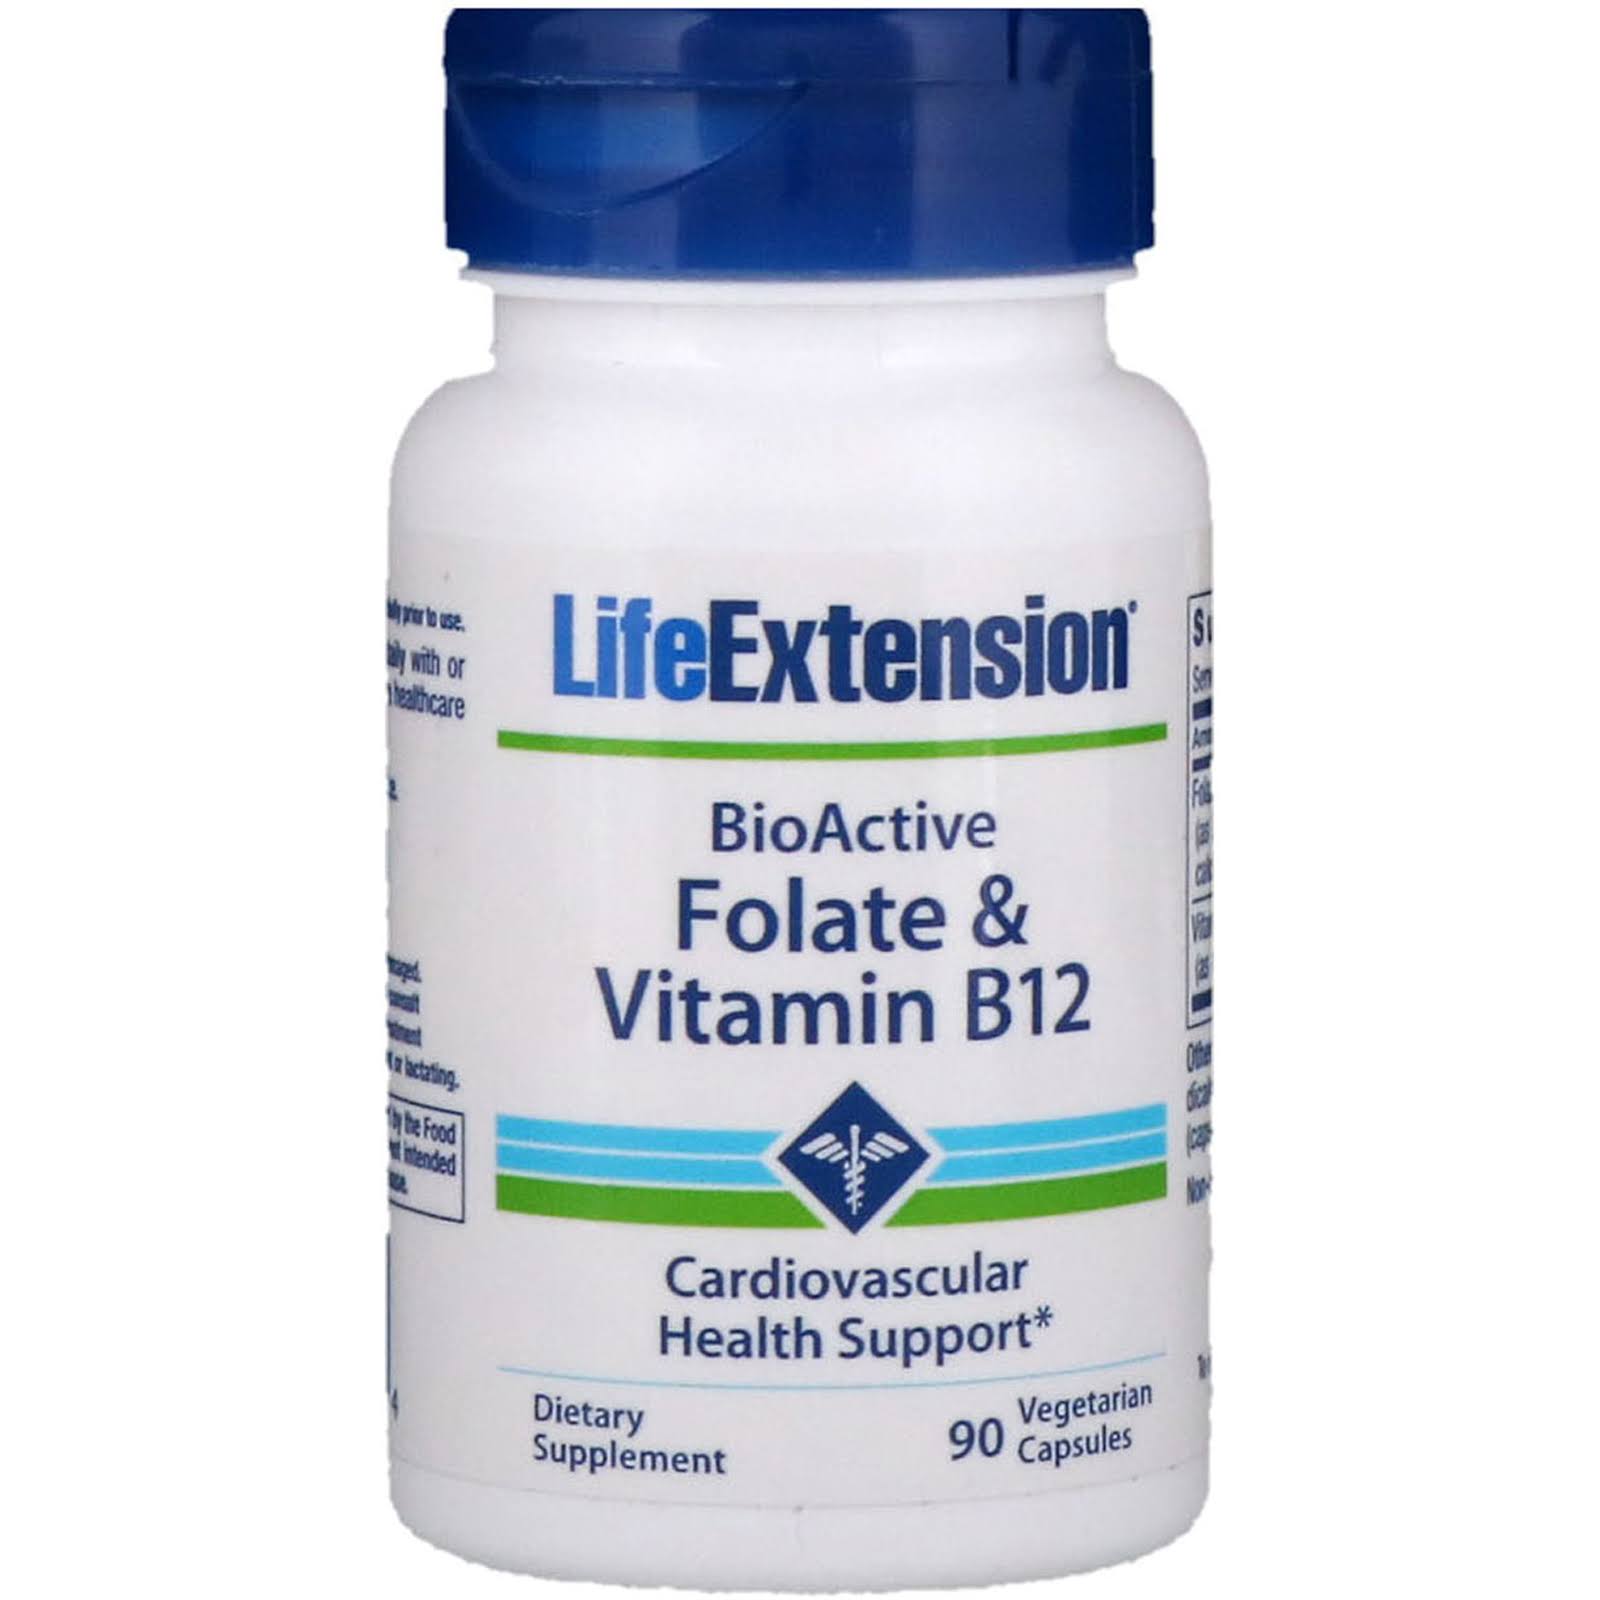 Life Extension Bioactive Folate & Vitamin B12 Cardiovascular Health Support - 90 Vegetarian Capsules